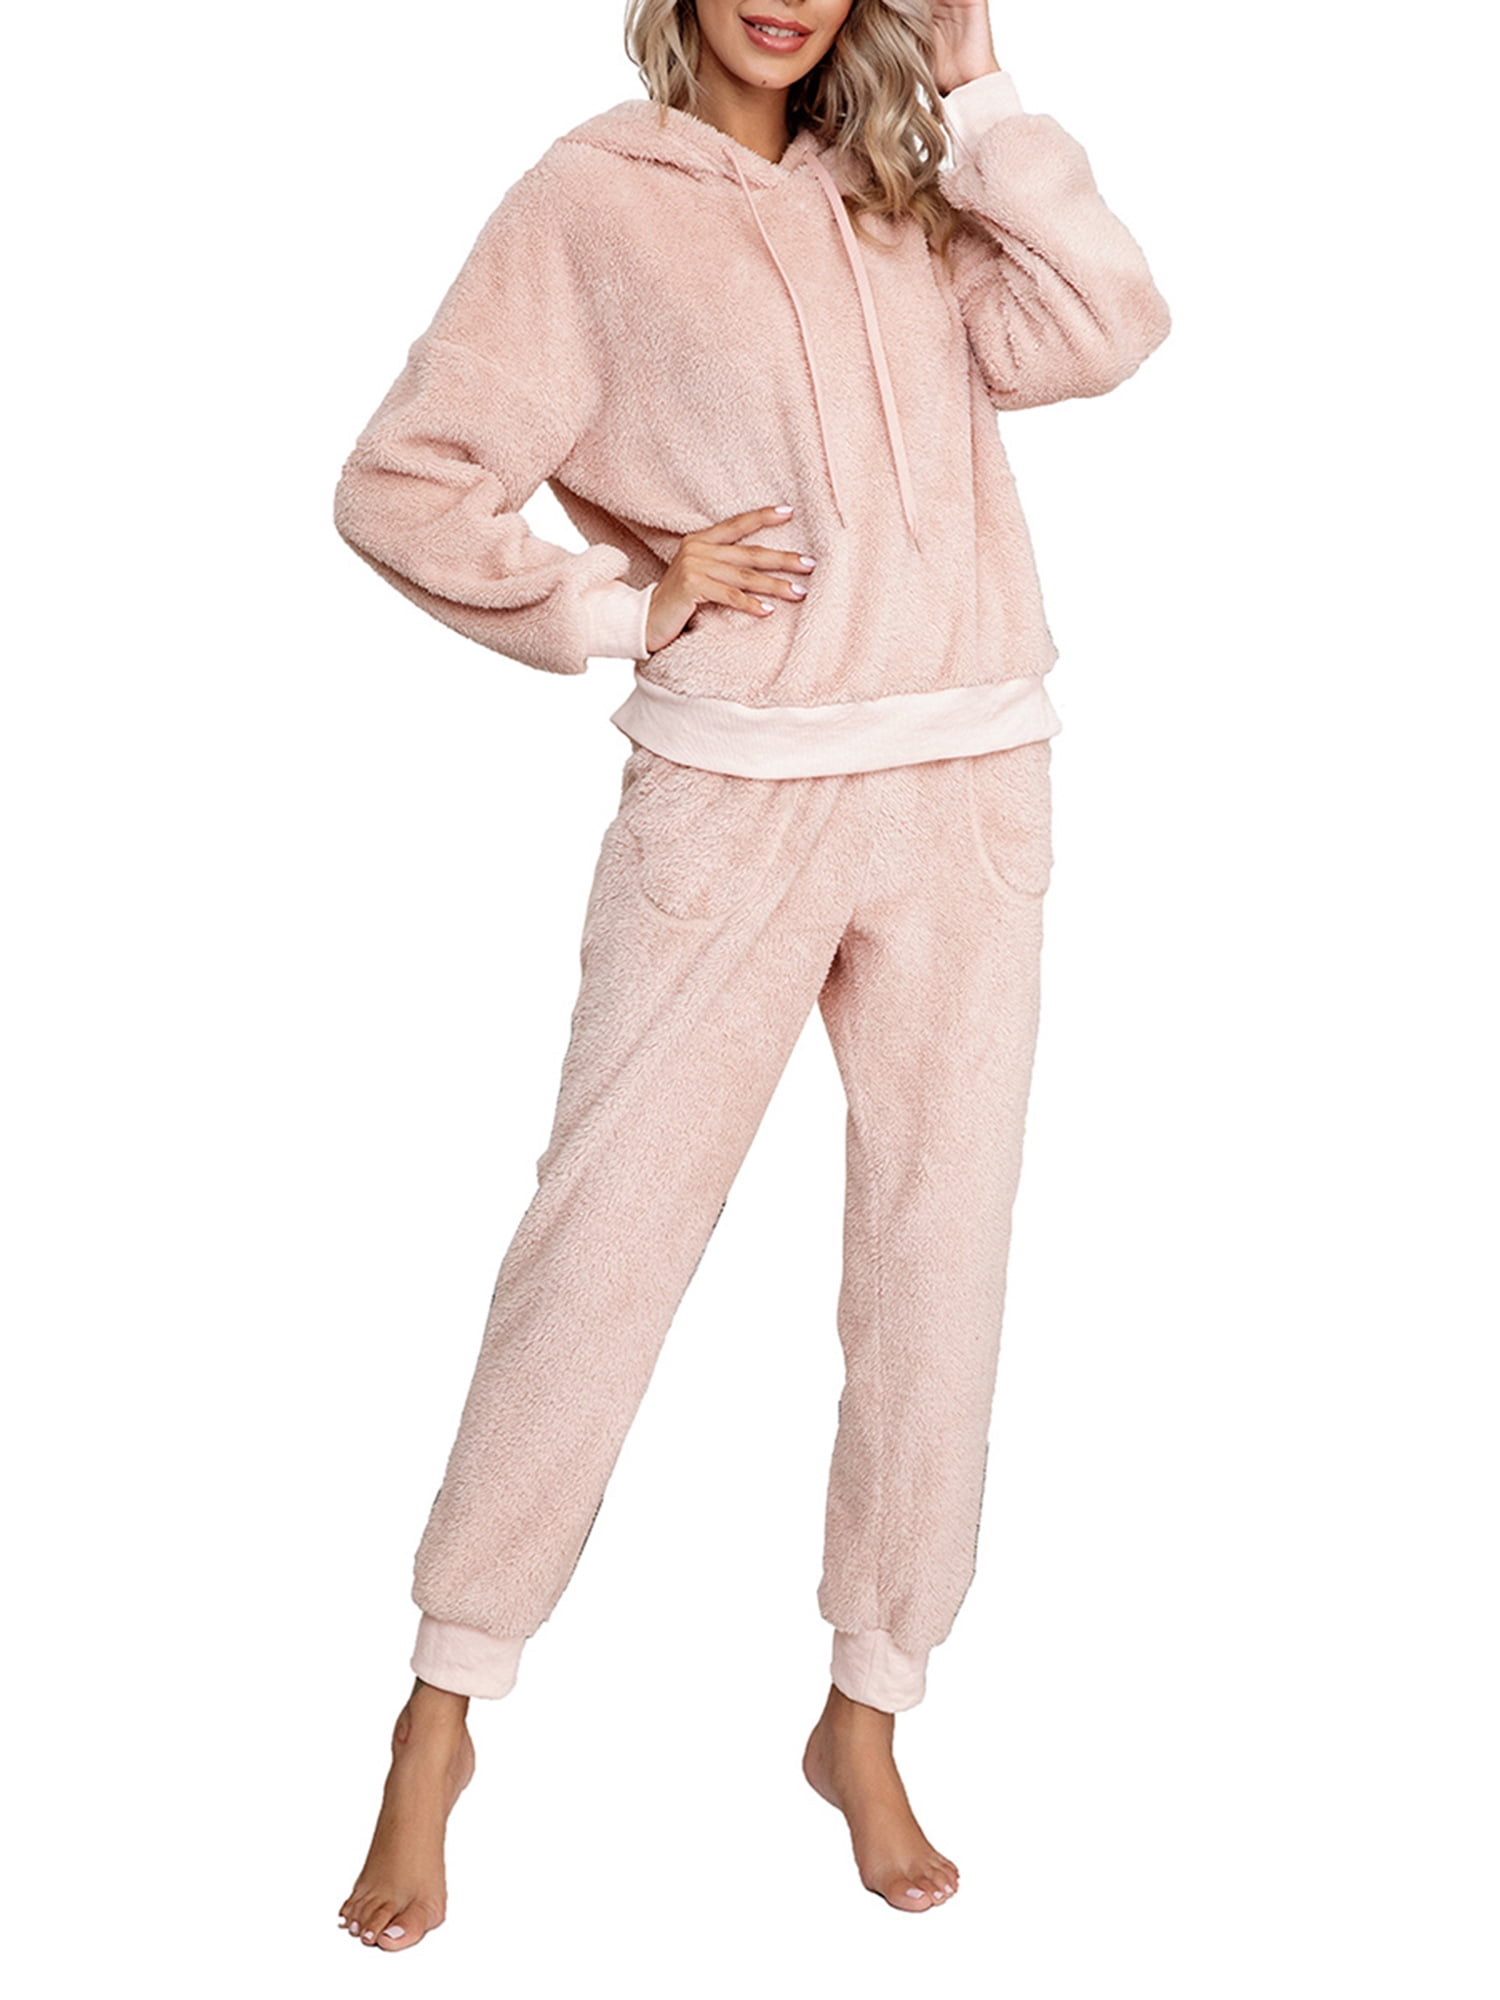 2pcs Women Cat Pajamas Cute Girls Sleepwear Soft Bathrobe Shorts Winter Lounge Sleepwear Sets